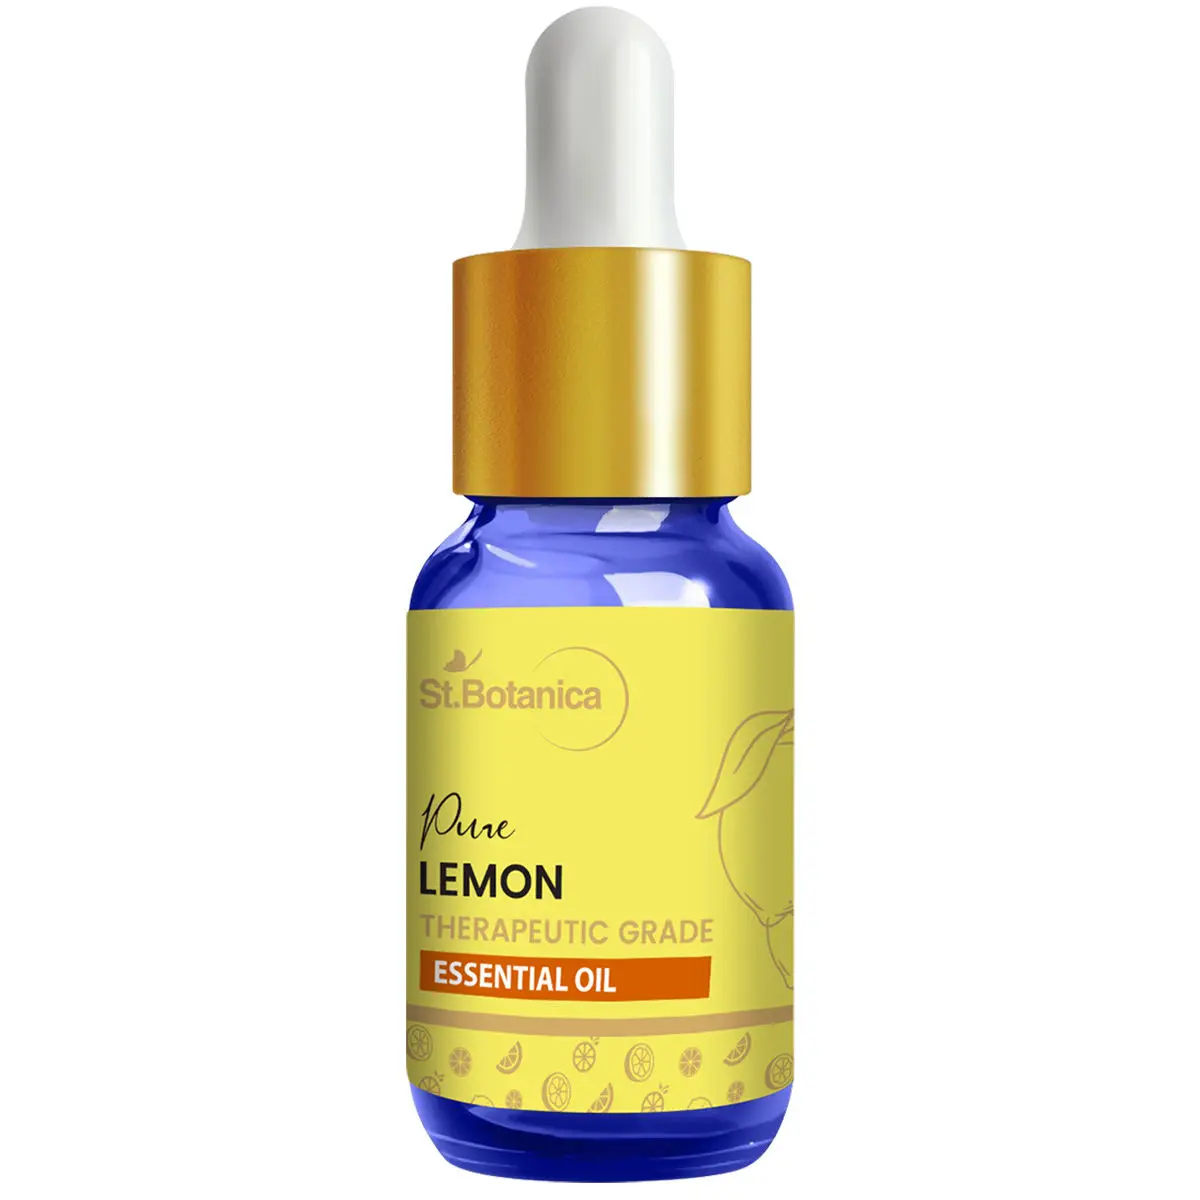 St.Botanica Pure Lemon Therapeutic Grade Essential Oil (15 ml)